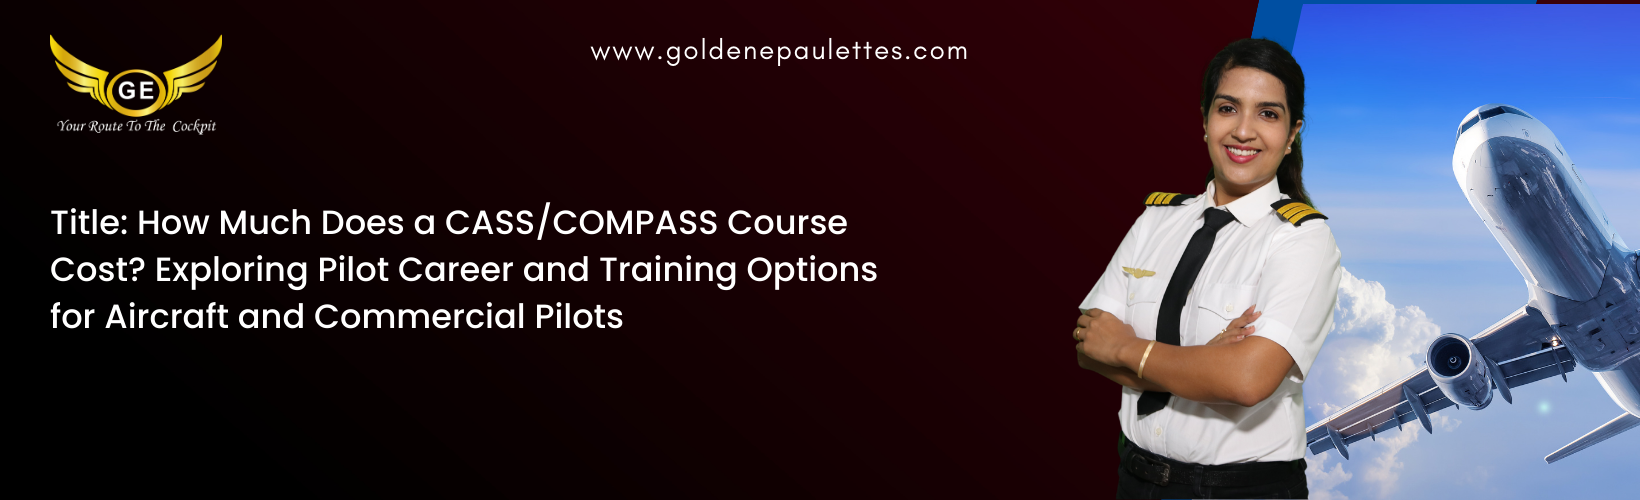 CASS/COMPASS Course Financial Aid